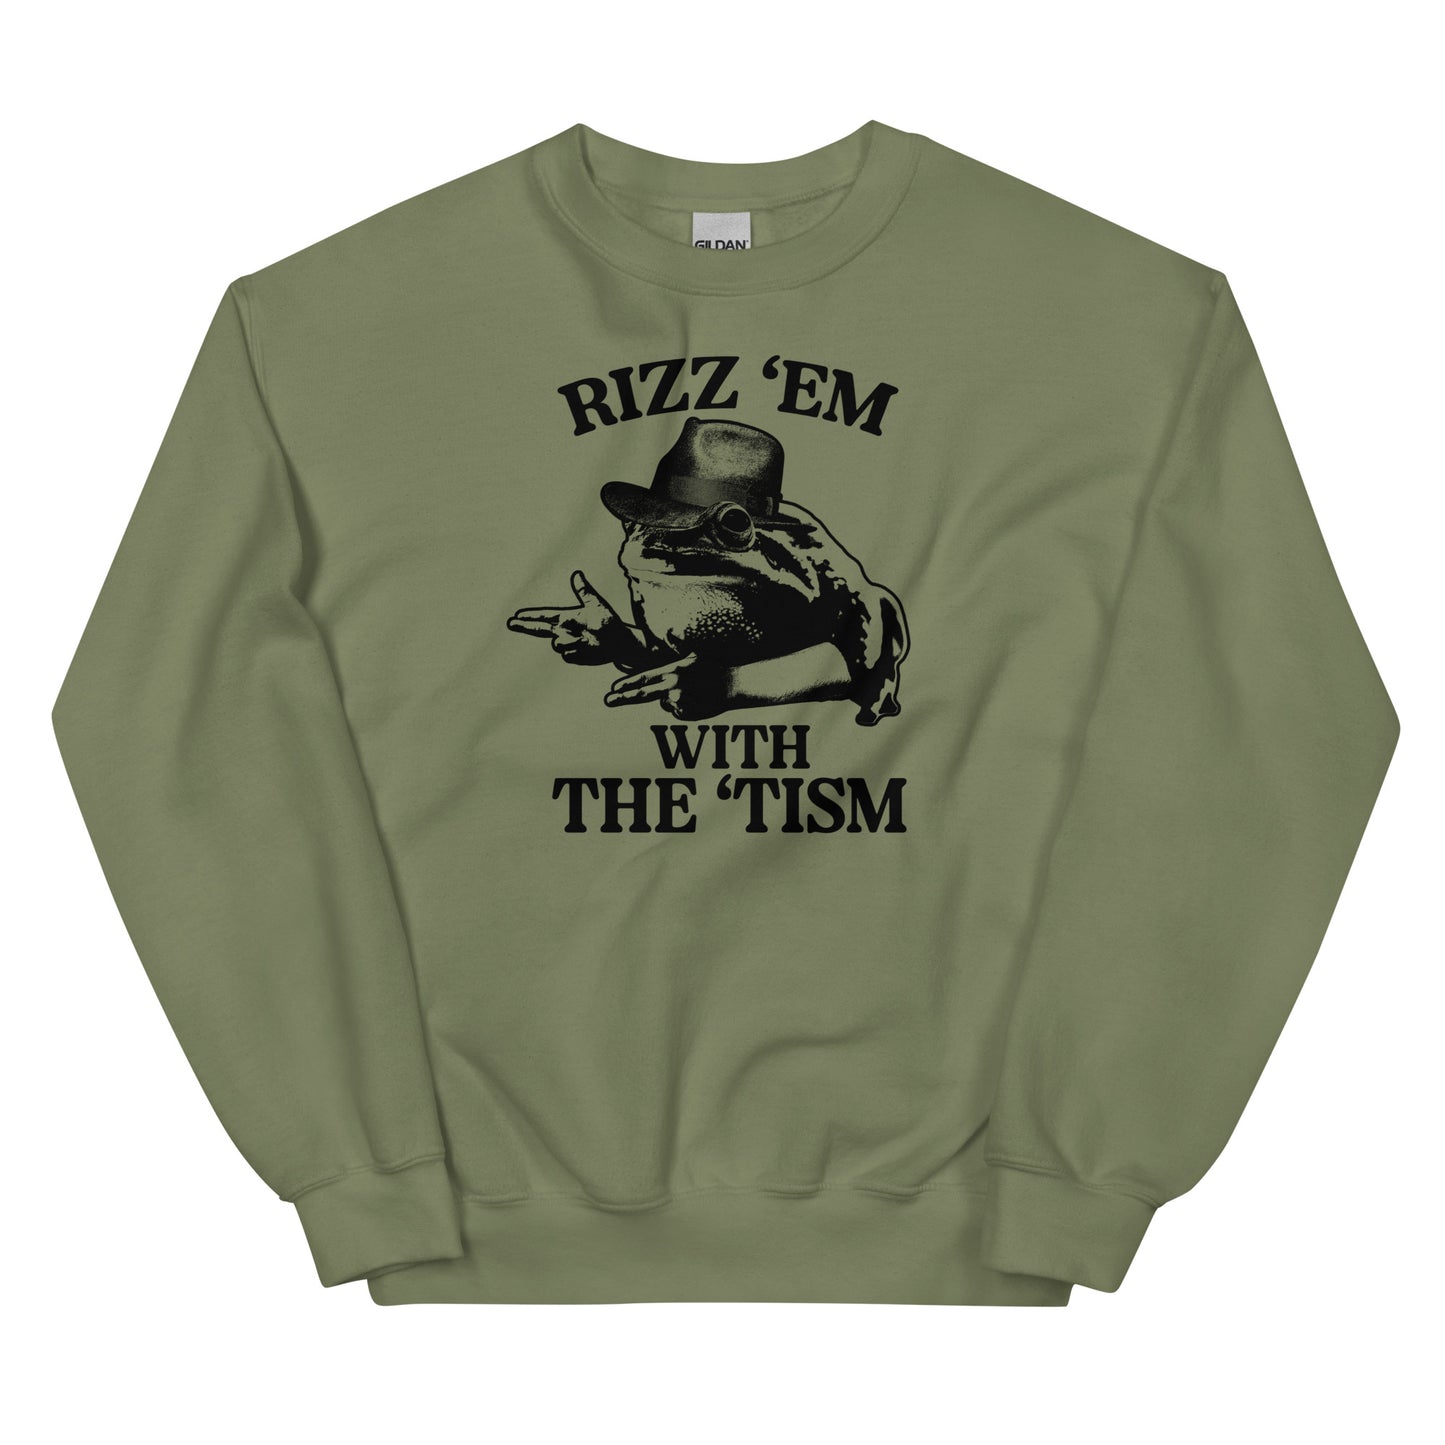 Rizz 'Em With the 'Tism (Frog) Unisex Sweatshirt